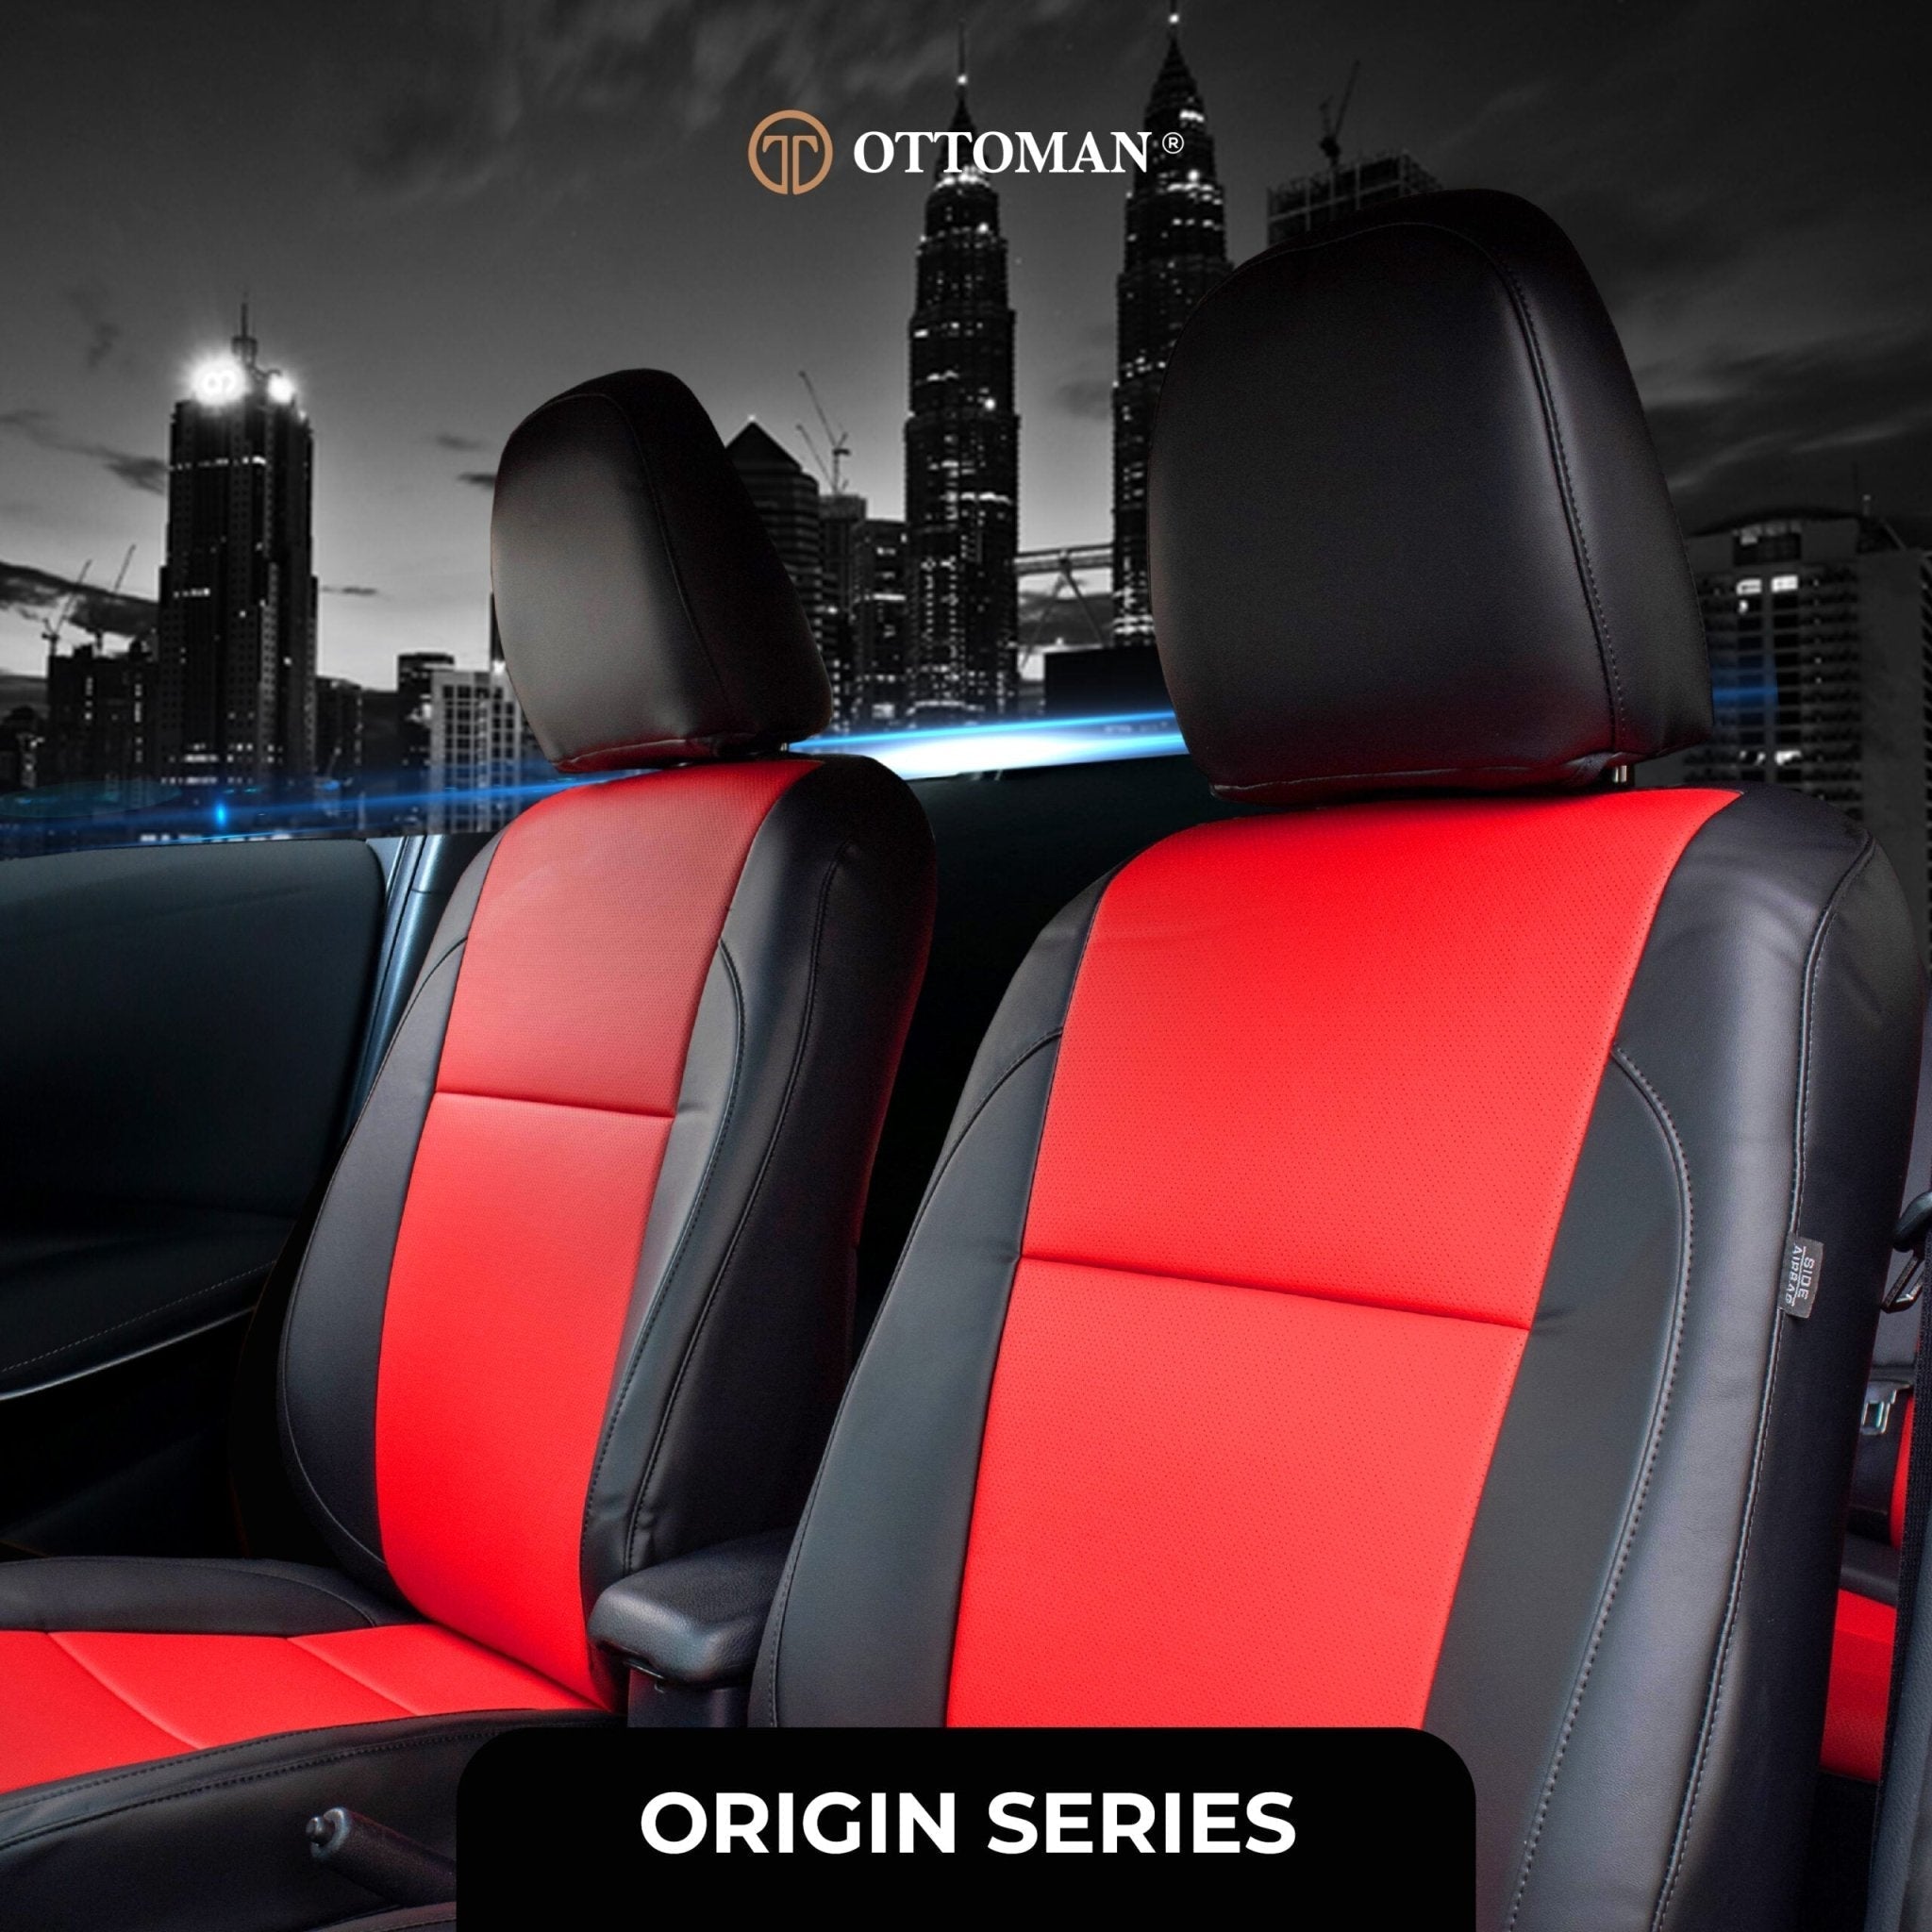 Honda Jazz (2009-2014) Ottoman Seat Cover Seat Cover in Klang Selangor, Penang, Johor Bahru - Ottoman Car Mats